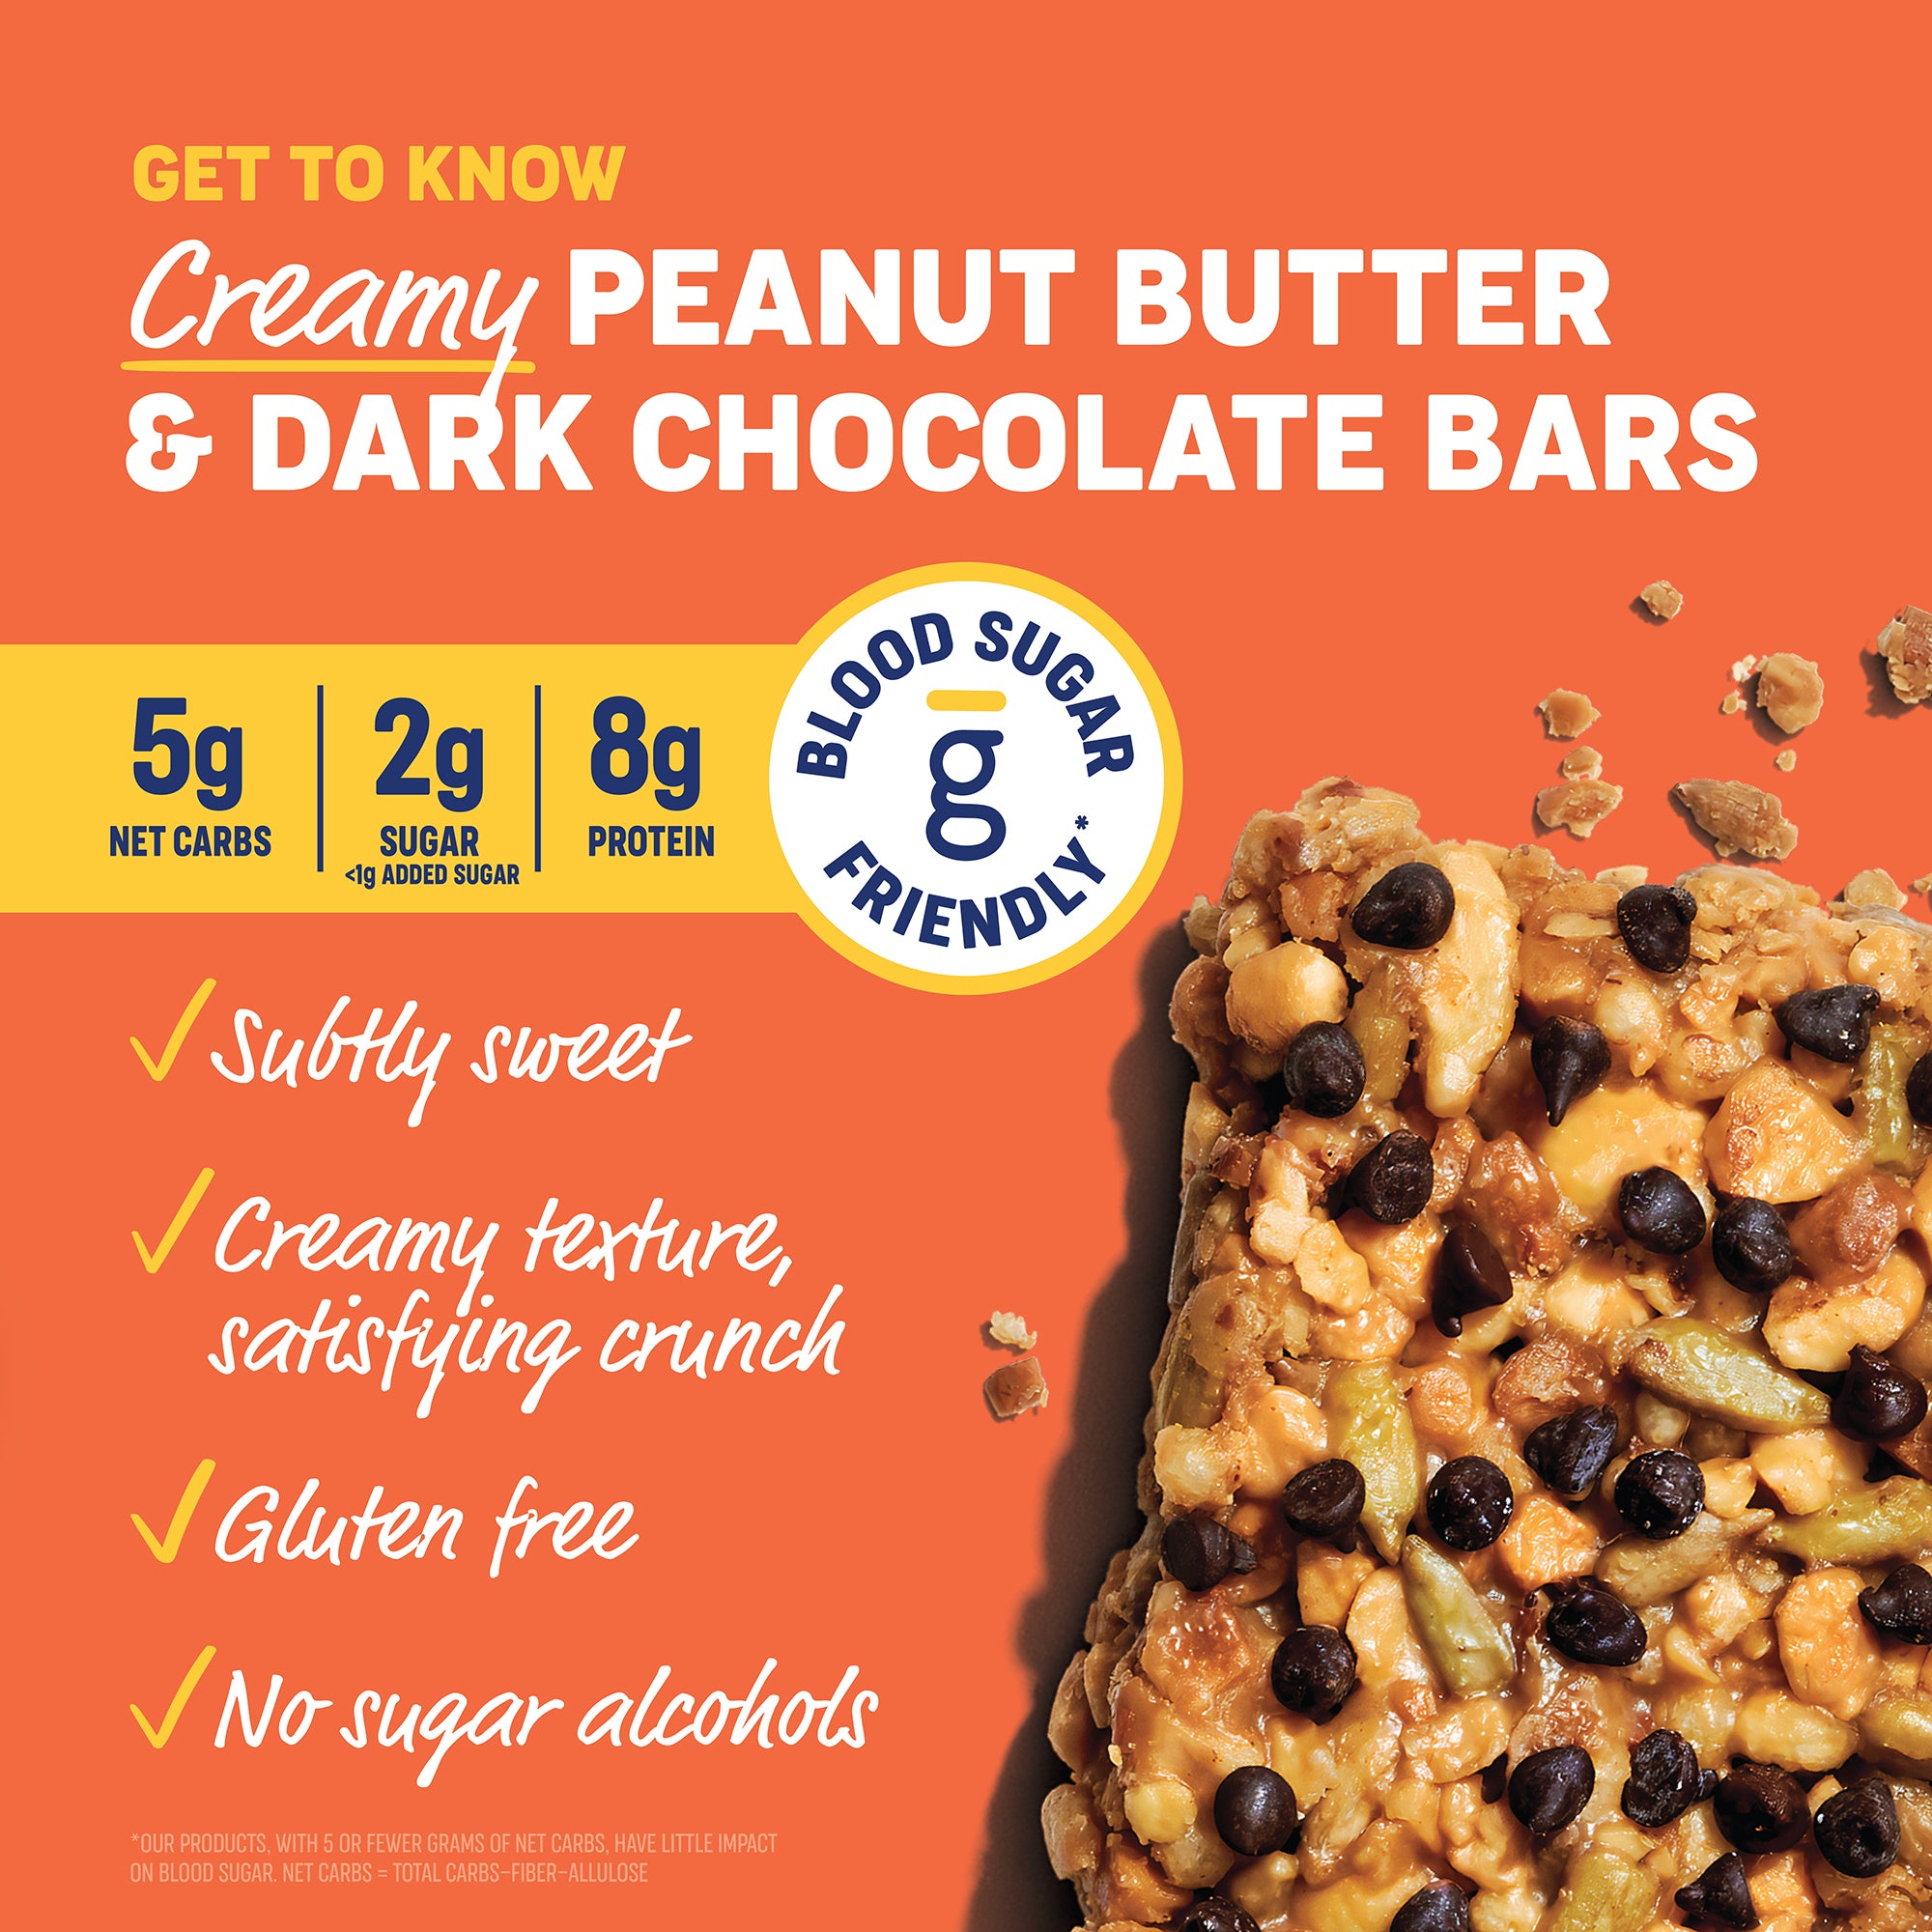 Thumnbail 3 of 6, description: Peanut Butter & Dark Chocolate